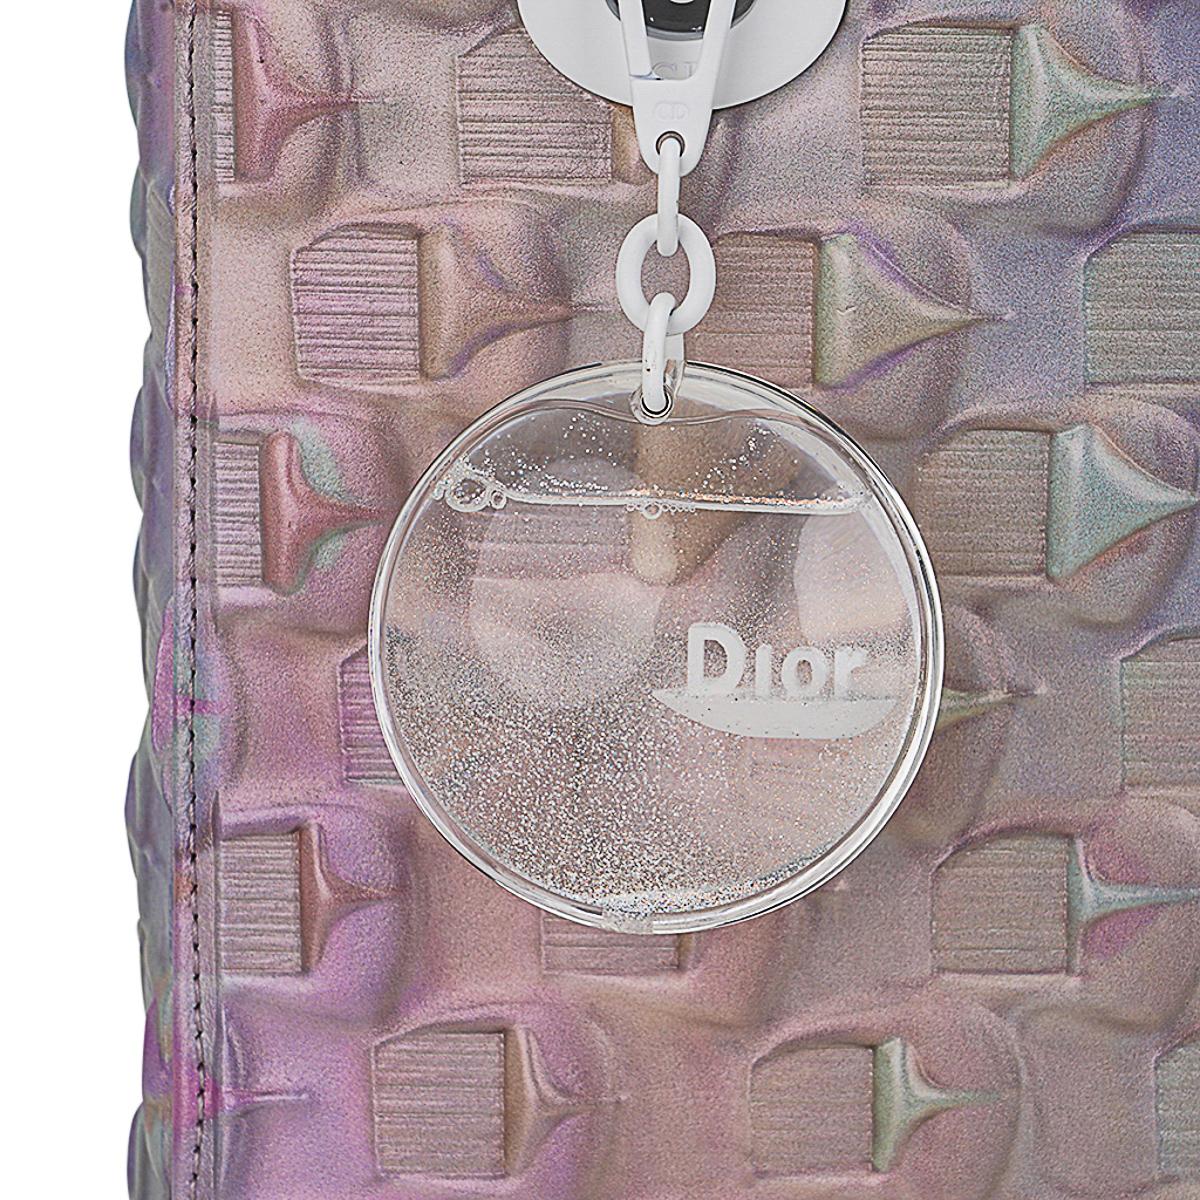 Dior Lady Dior Art Bag #6 Iridescent Pastels by Daisuke Ohba 3